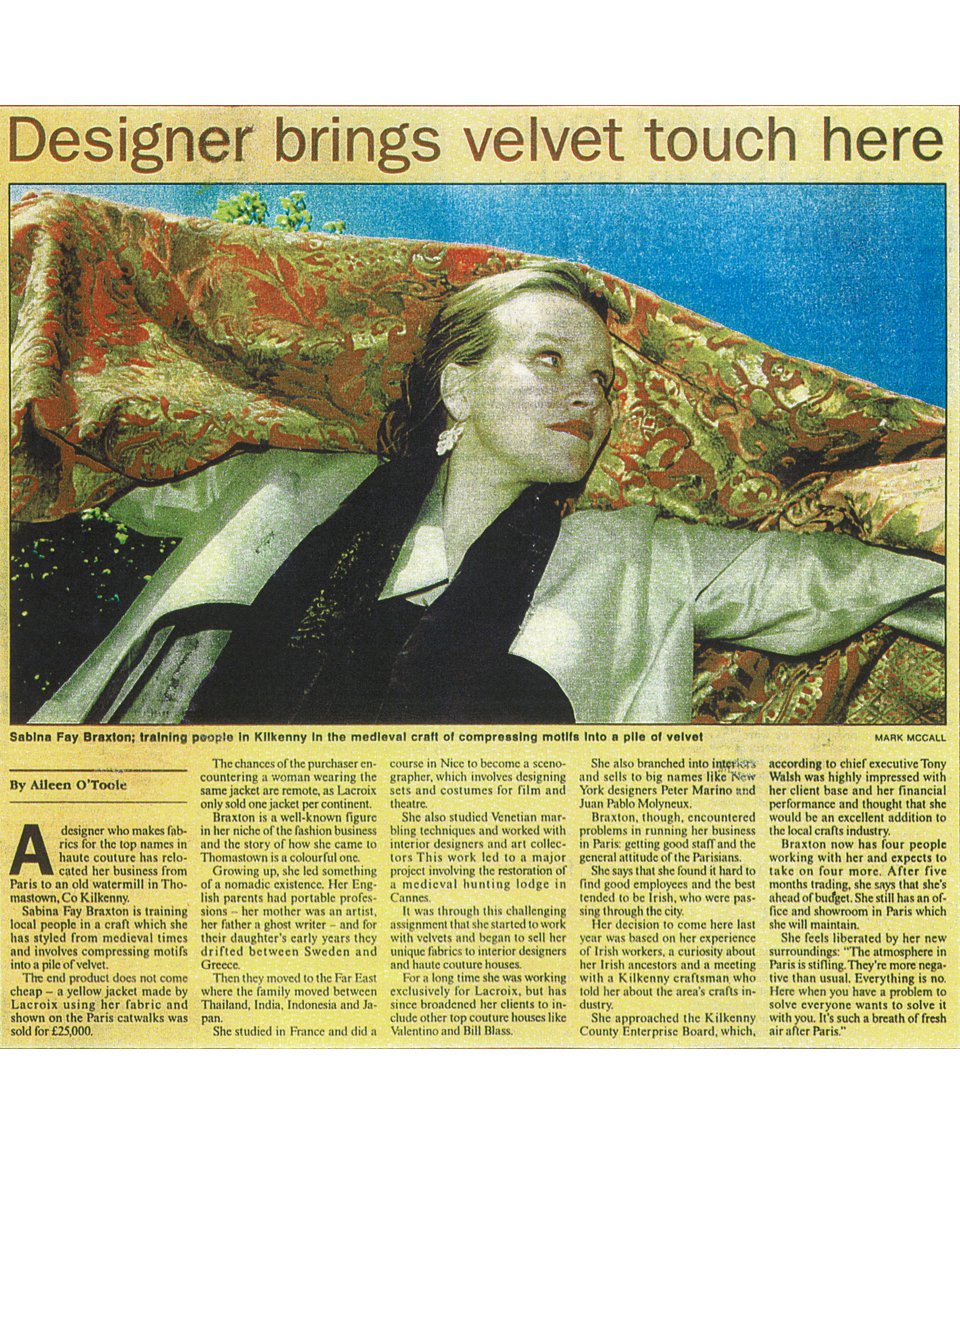 The Irish Times - May 1999